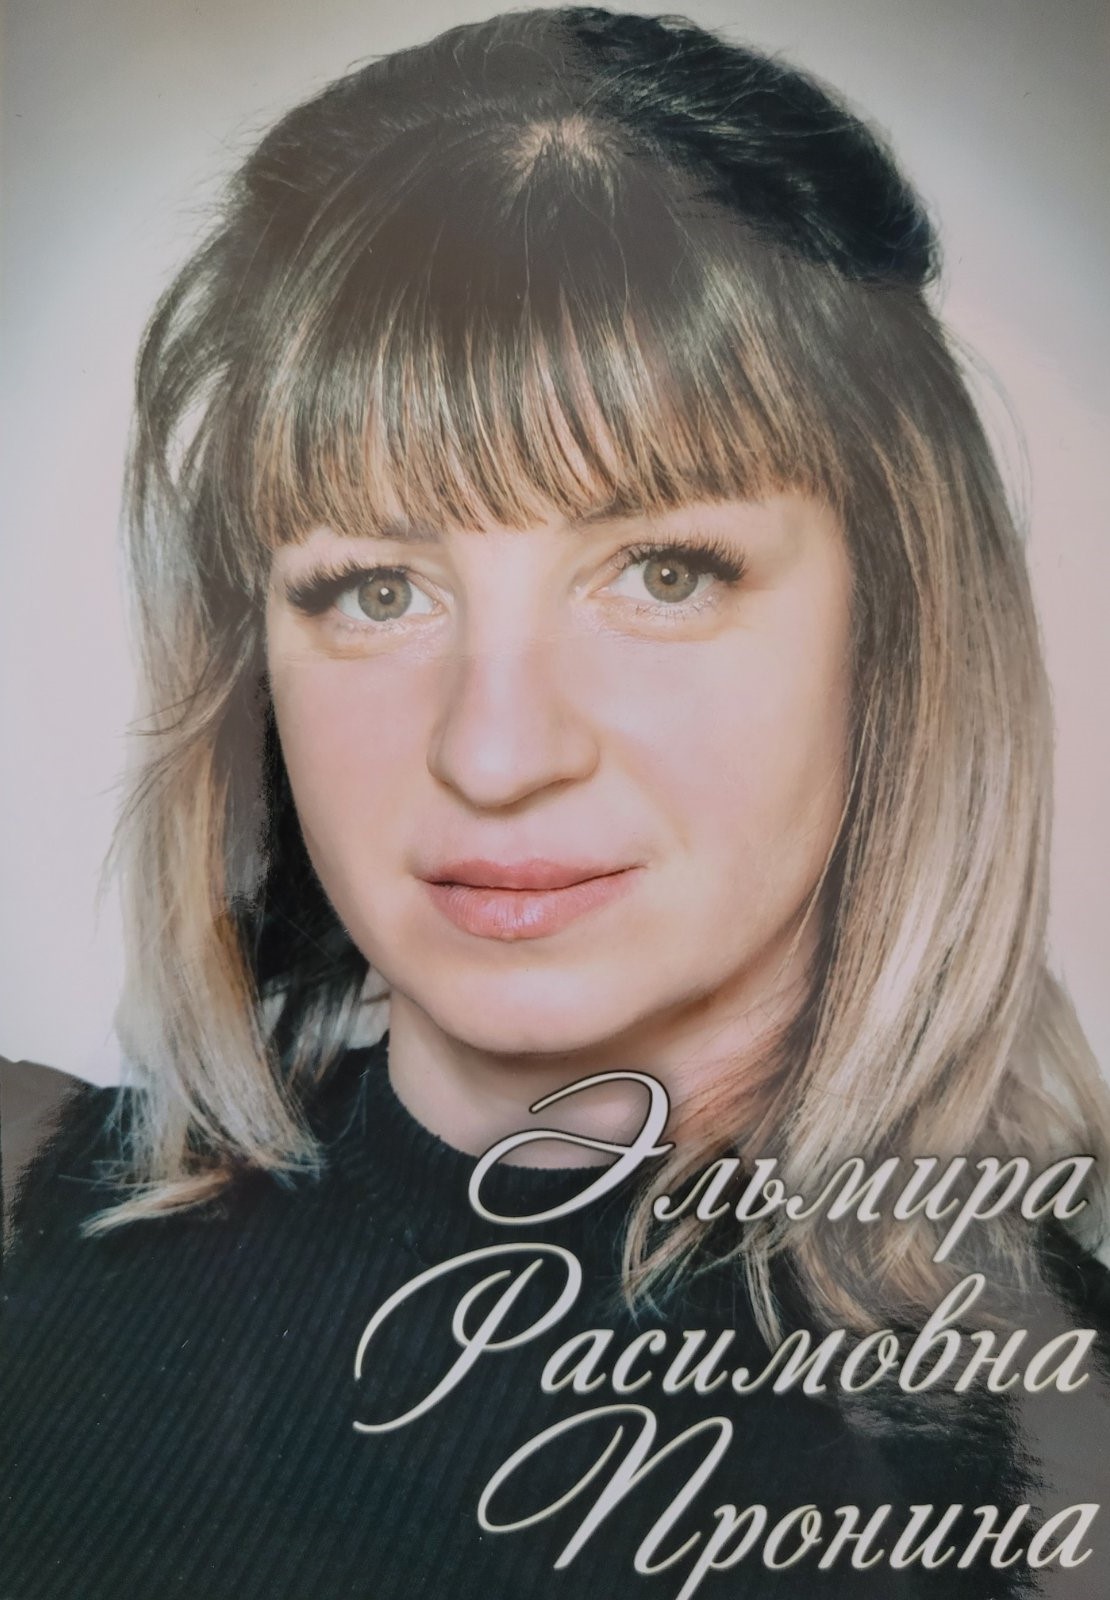 Пронина Эльмира Расимовна.